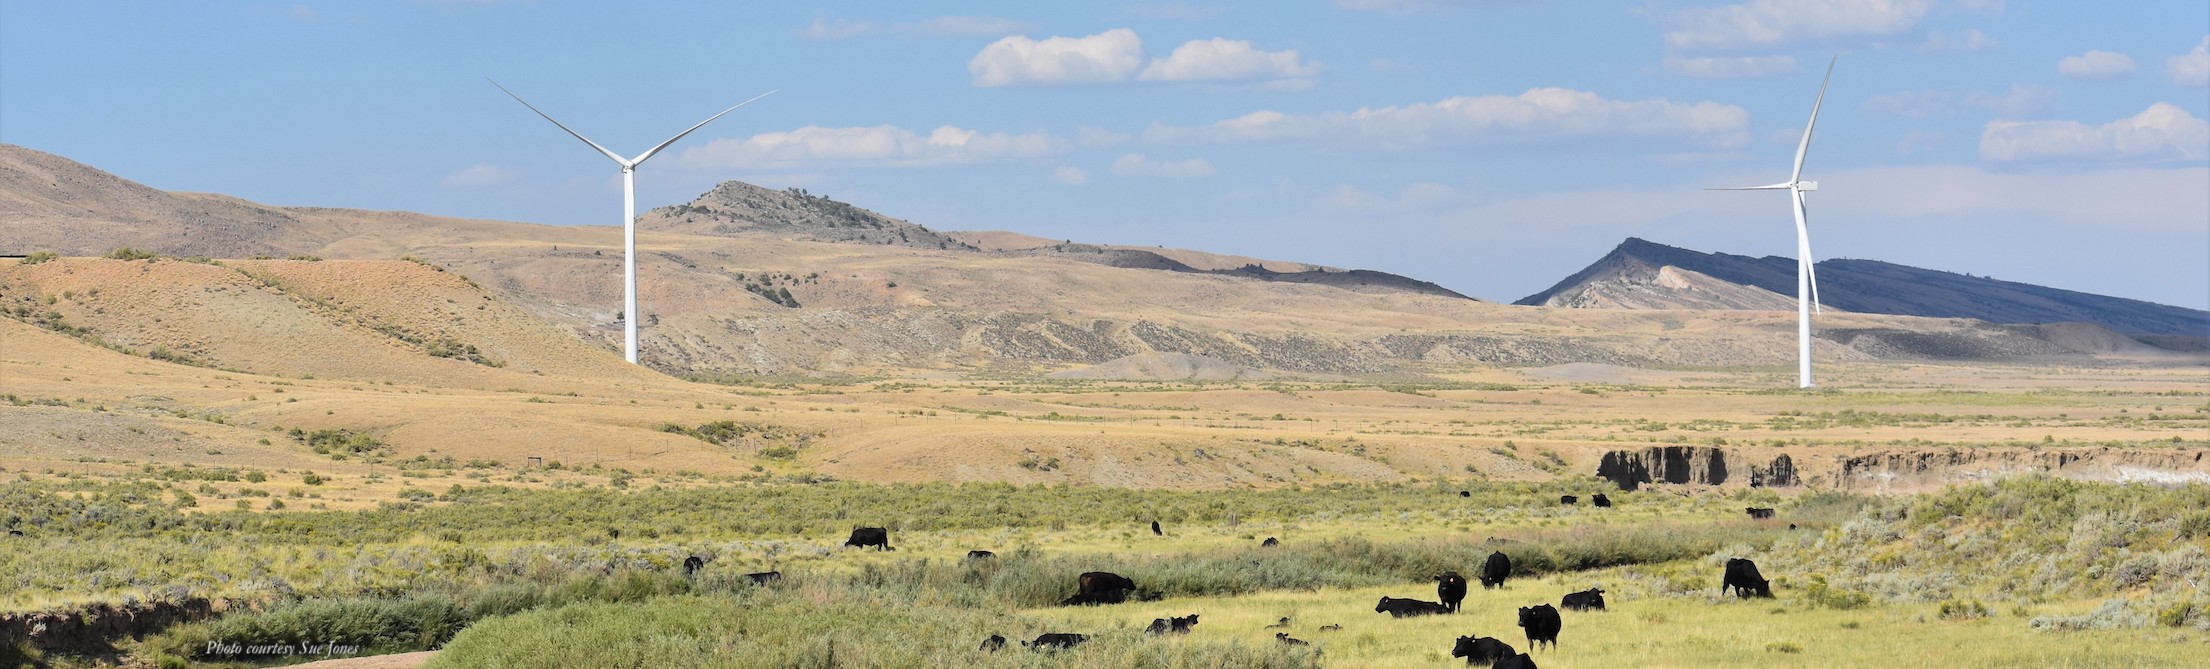 Photo of cows grazing near wind turbines in Wyoming. Photo courtesy Sue Jones.